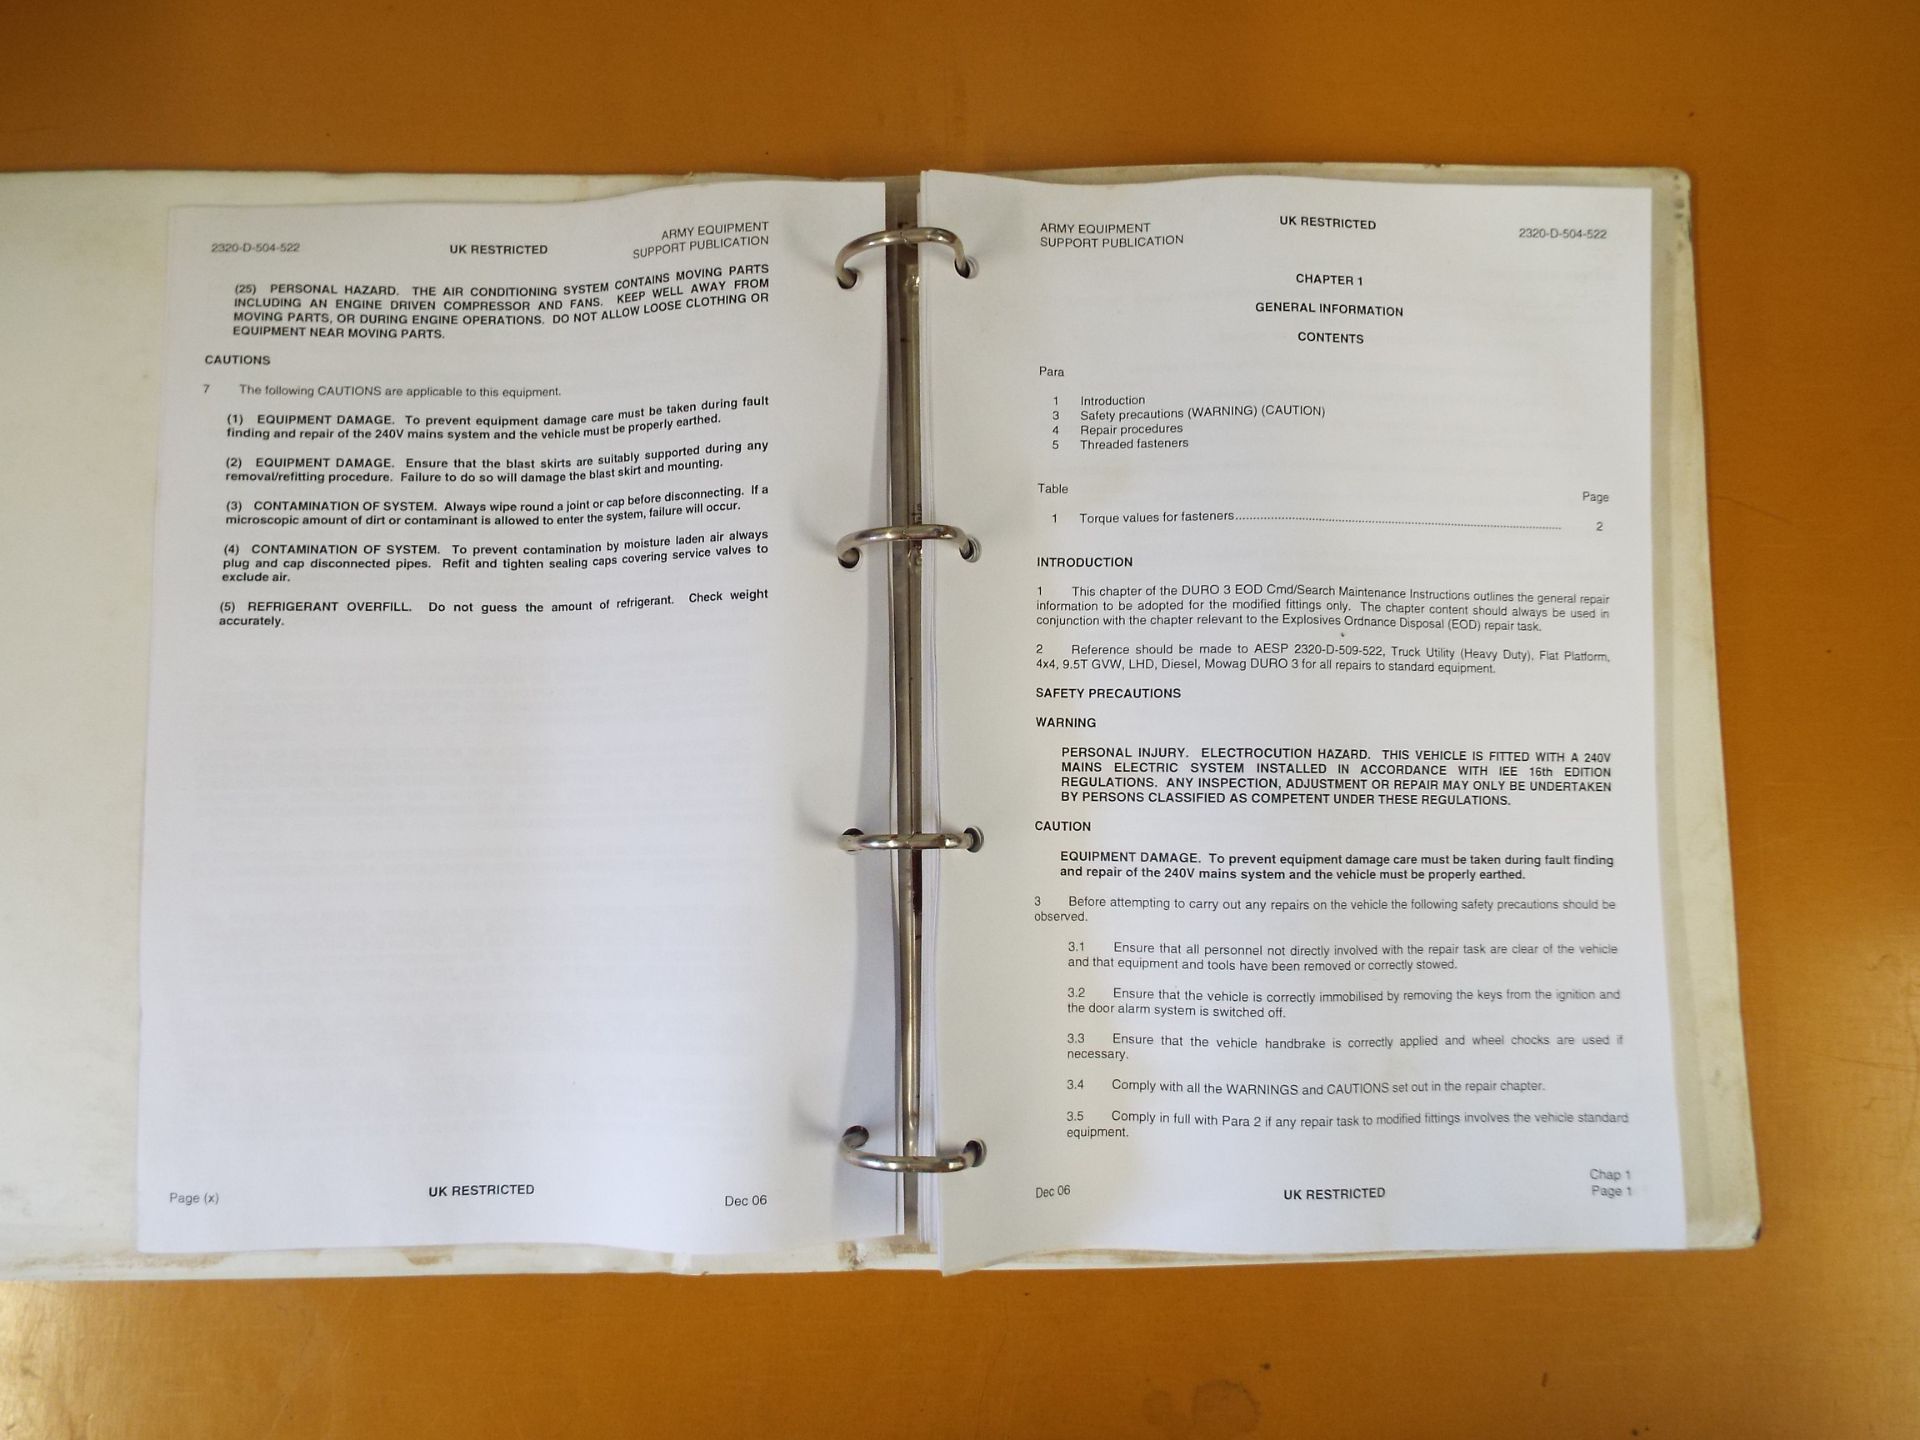 Extremely Rare Mowag Duro III 4x4 Maintenance Instructions Document - Bild 3 aus 9